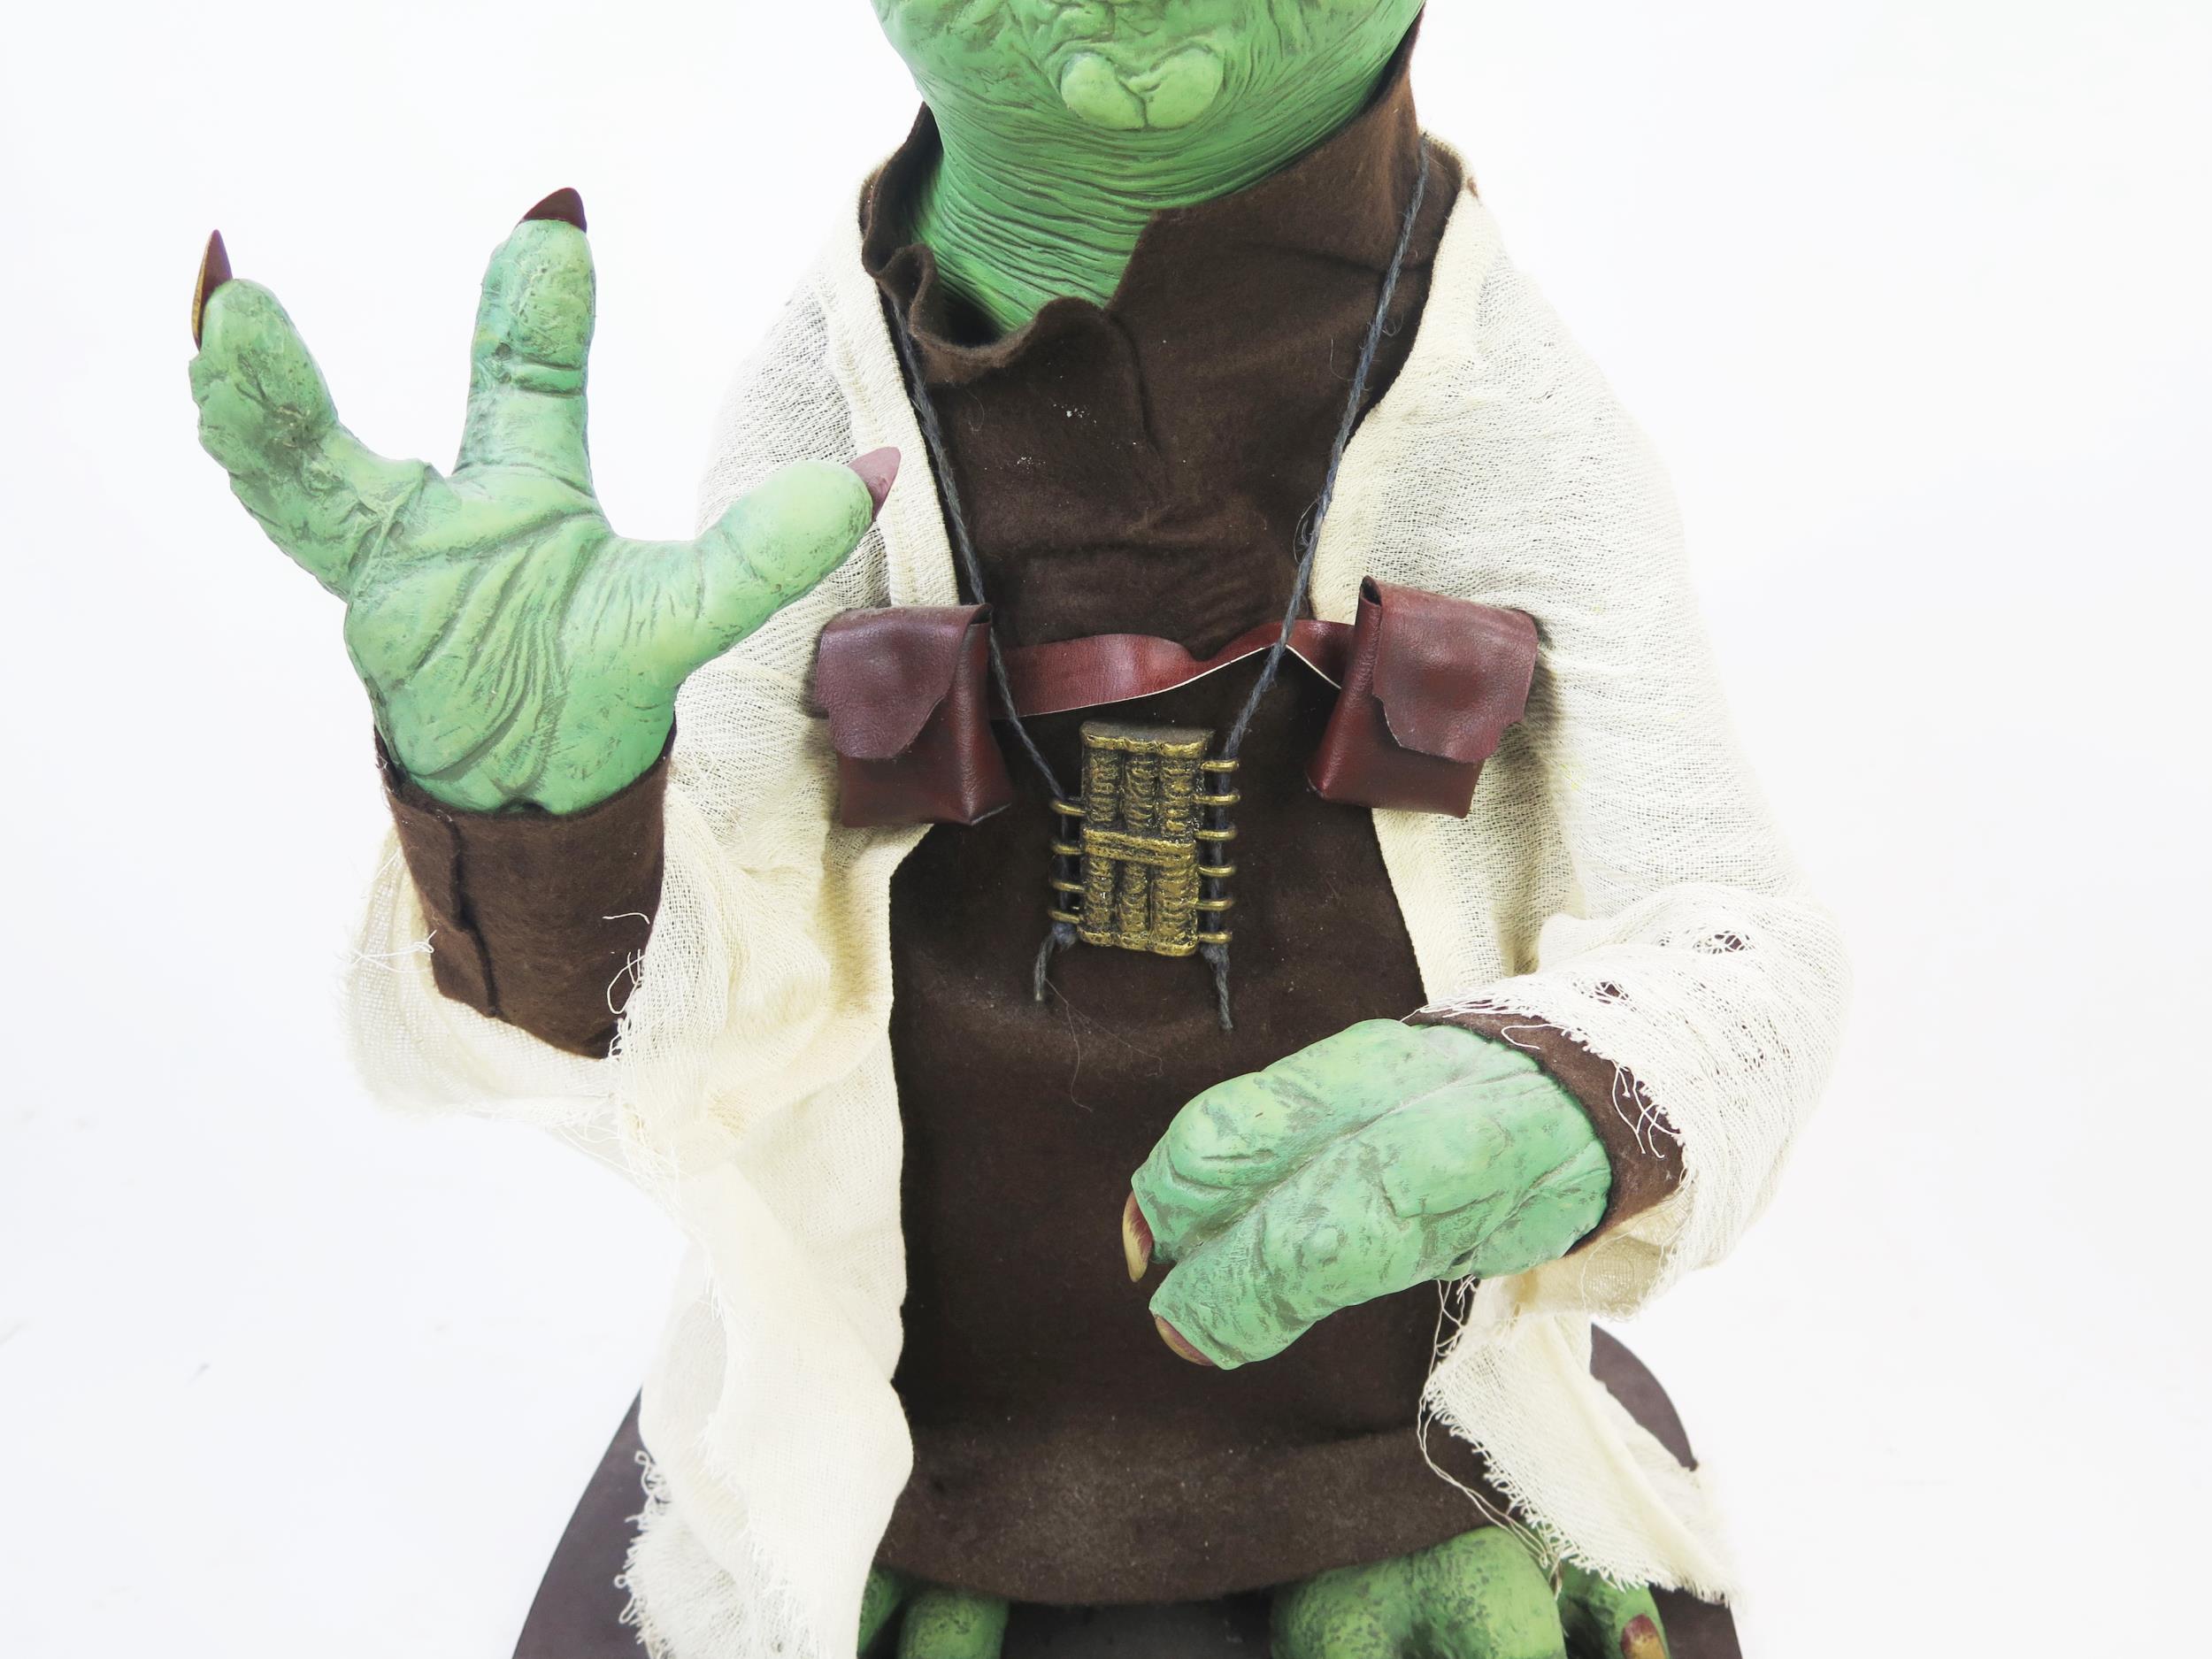 Life Size Yoda from Star Wars model replica film prop made from foam rubber, 27"/69cm tall - Bild 3 aus 5